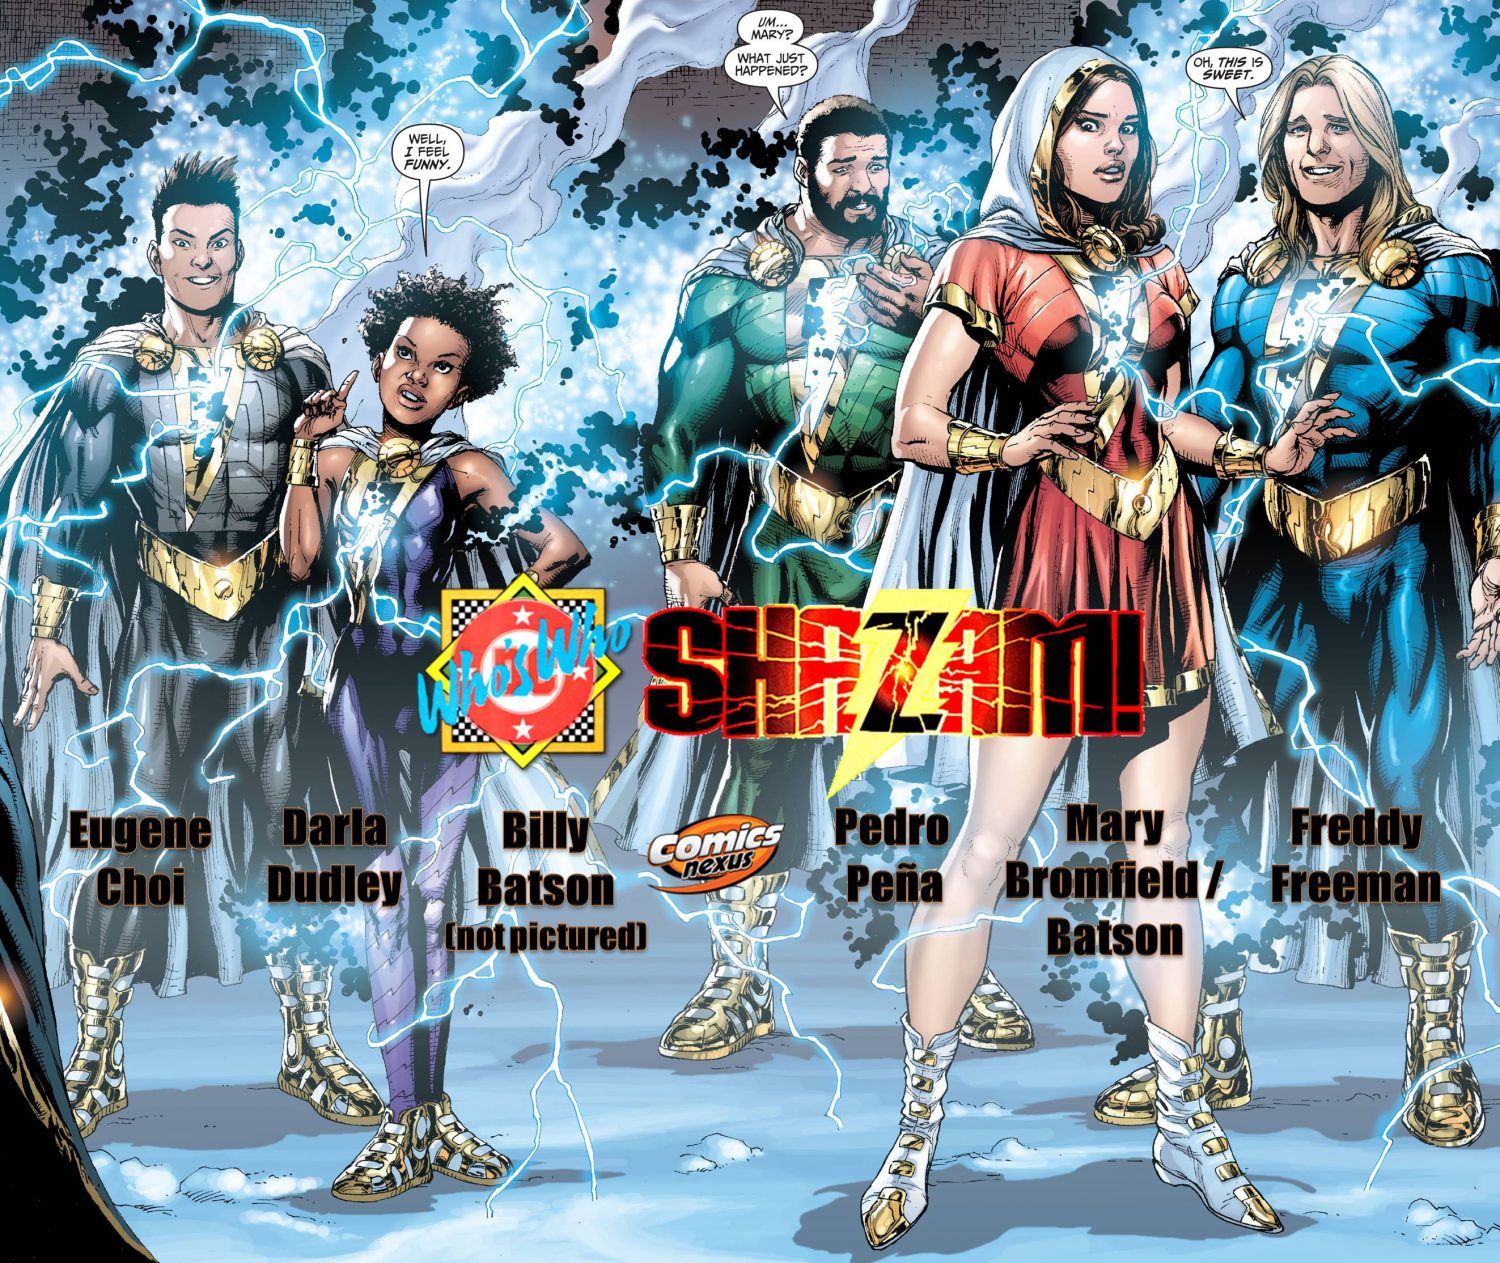 Shazam Movie Spoilers: Who Portrays The Captain Marvel Shazam Family / Lightning League In The Film? Who's Who?!